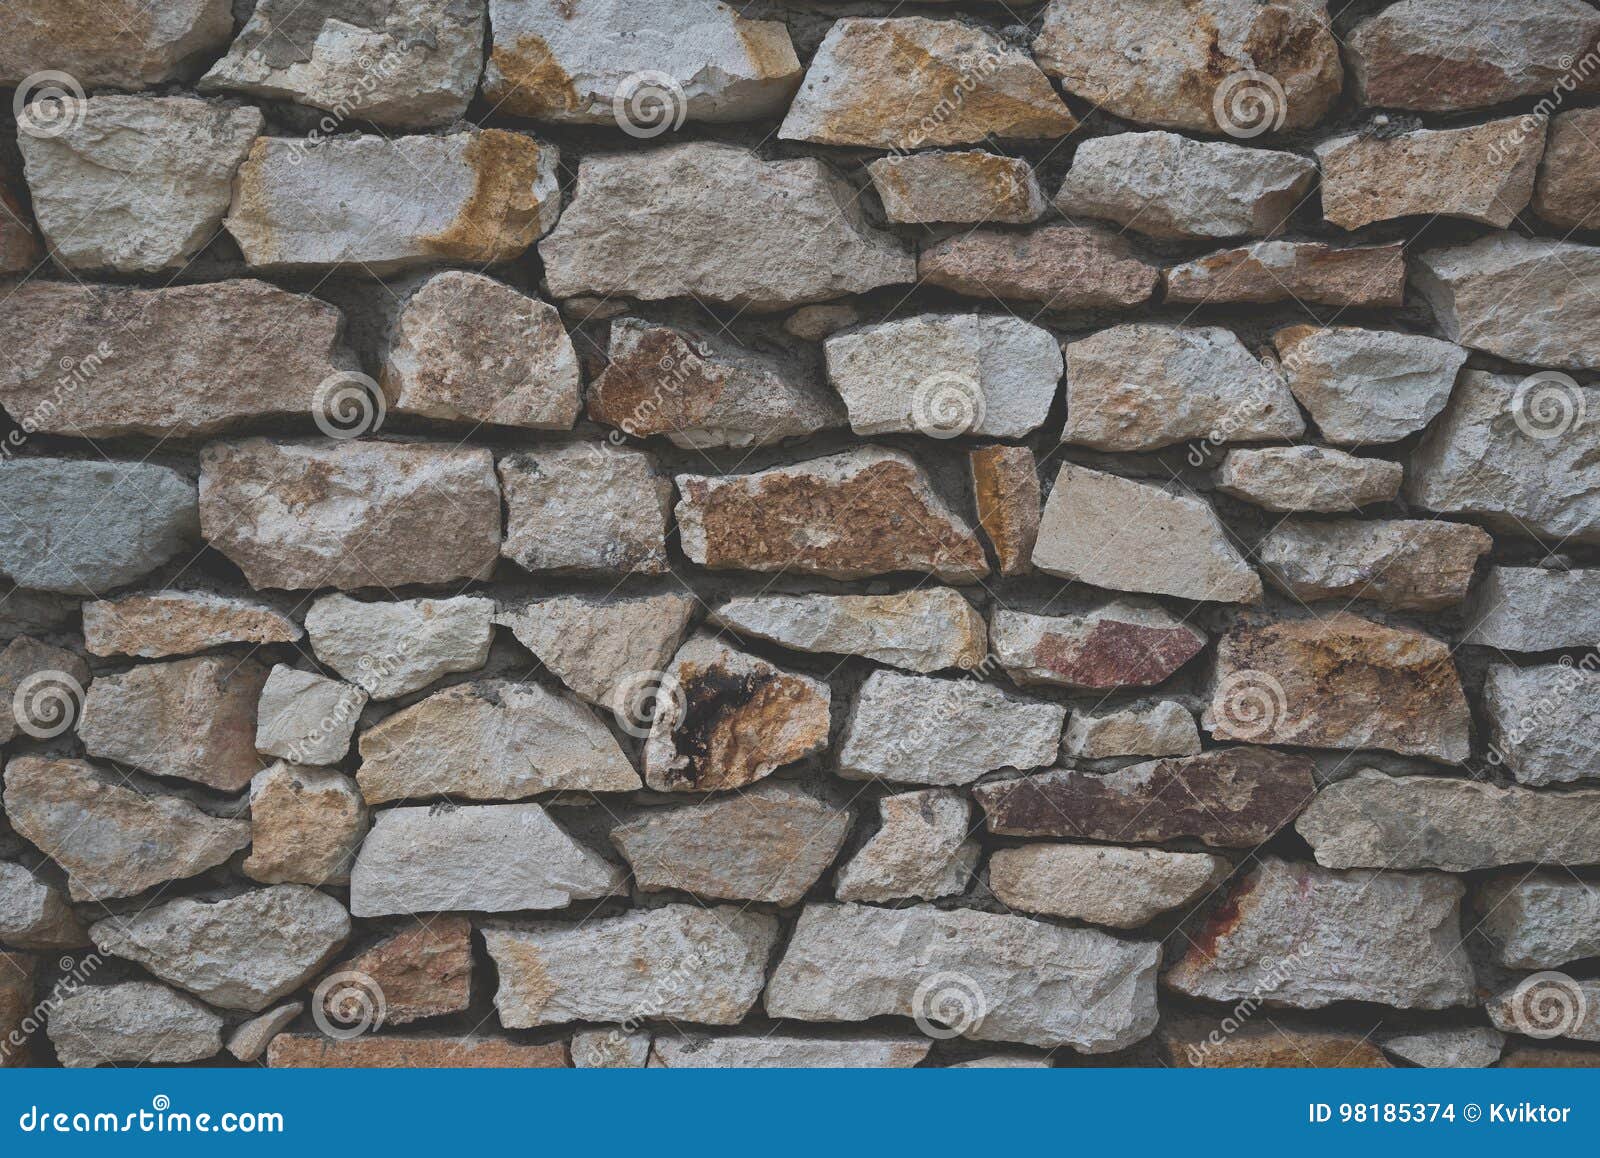 stone wall background with matt film effect